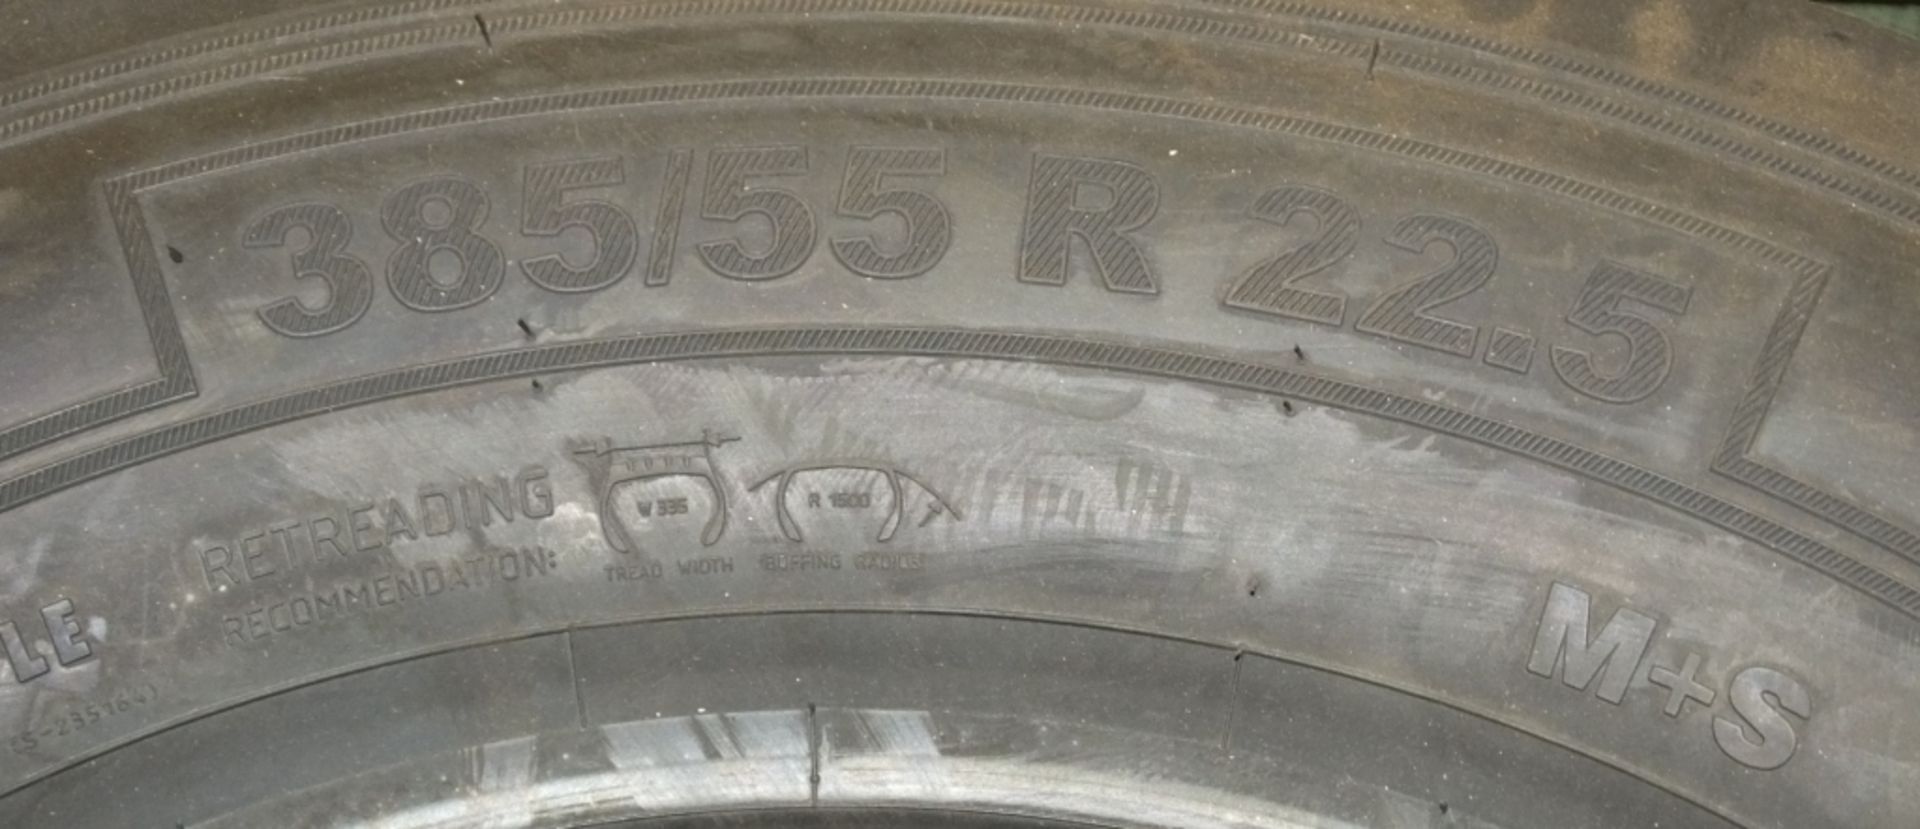 Barum BF 200 Road tire - 385/55 R 22.5 (new & unused) - Image 3 of 5